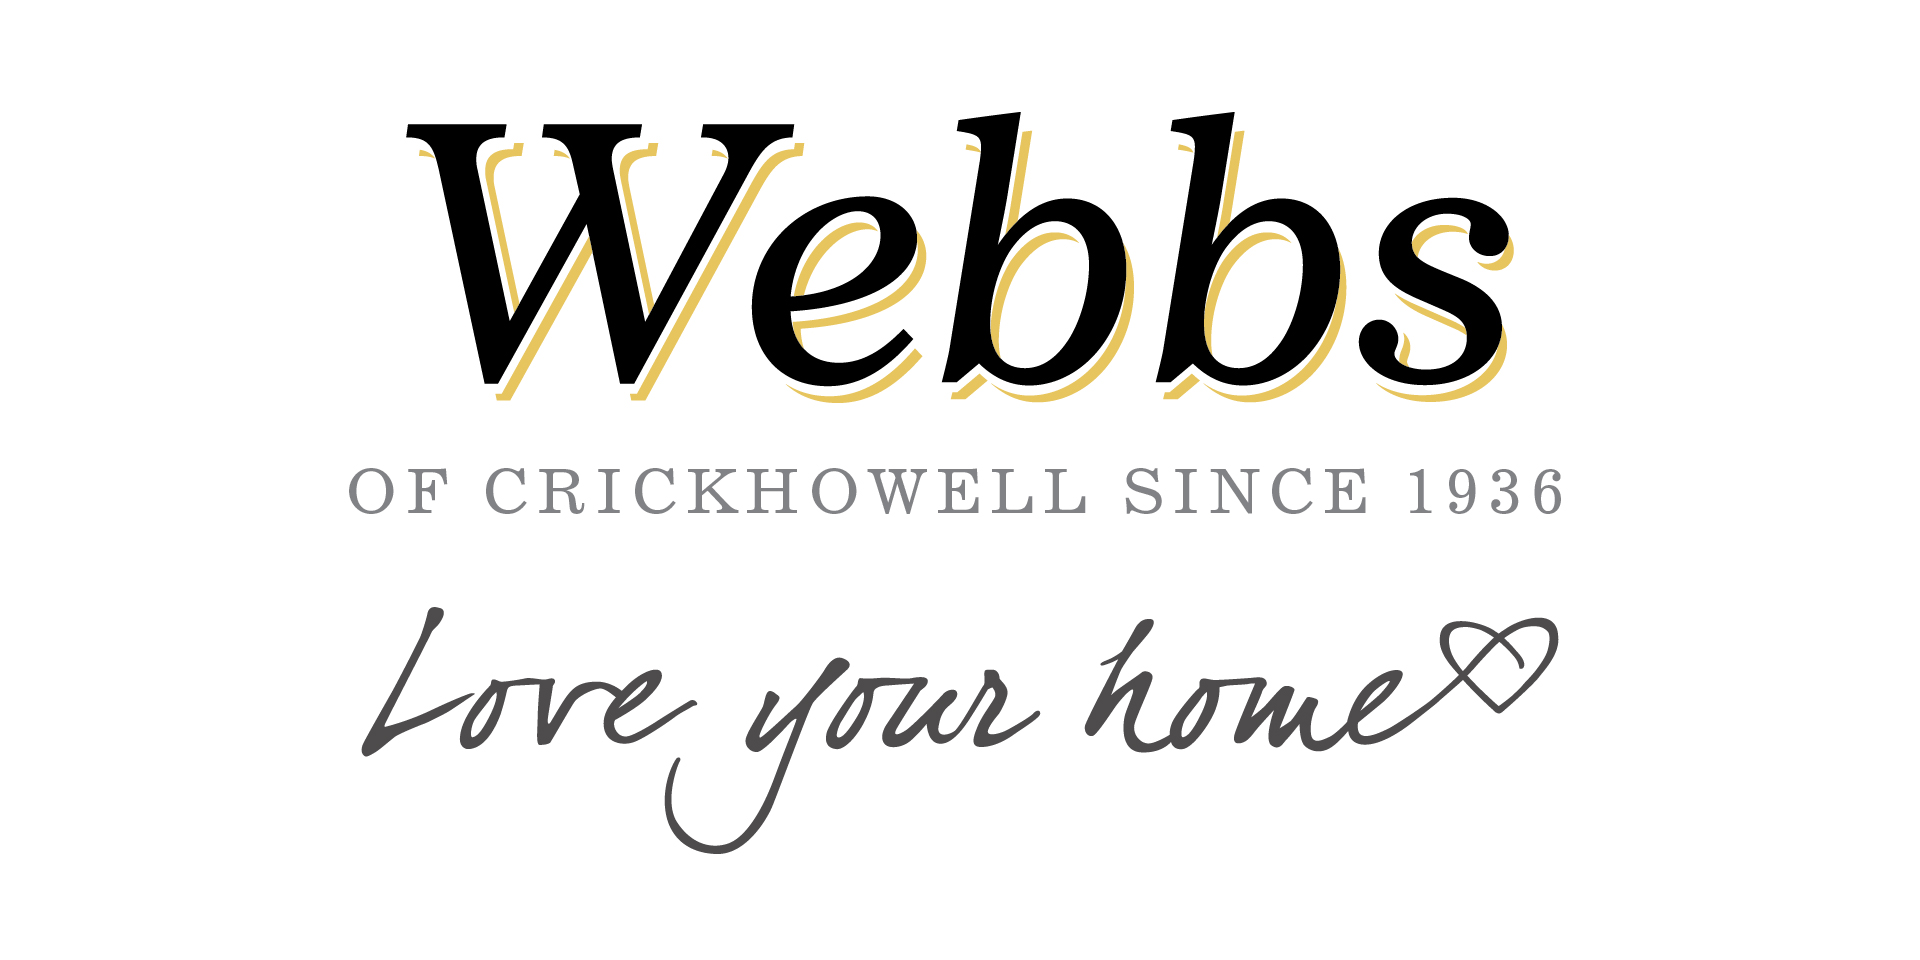 Webbs Of Crickhowell Since 1936 Love your home brand identity logo